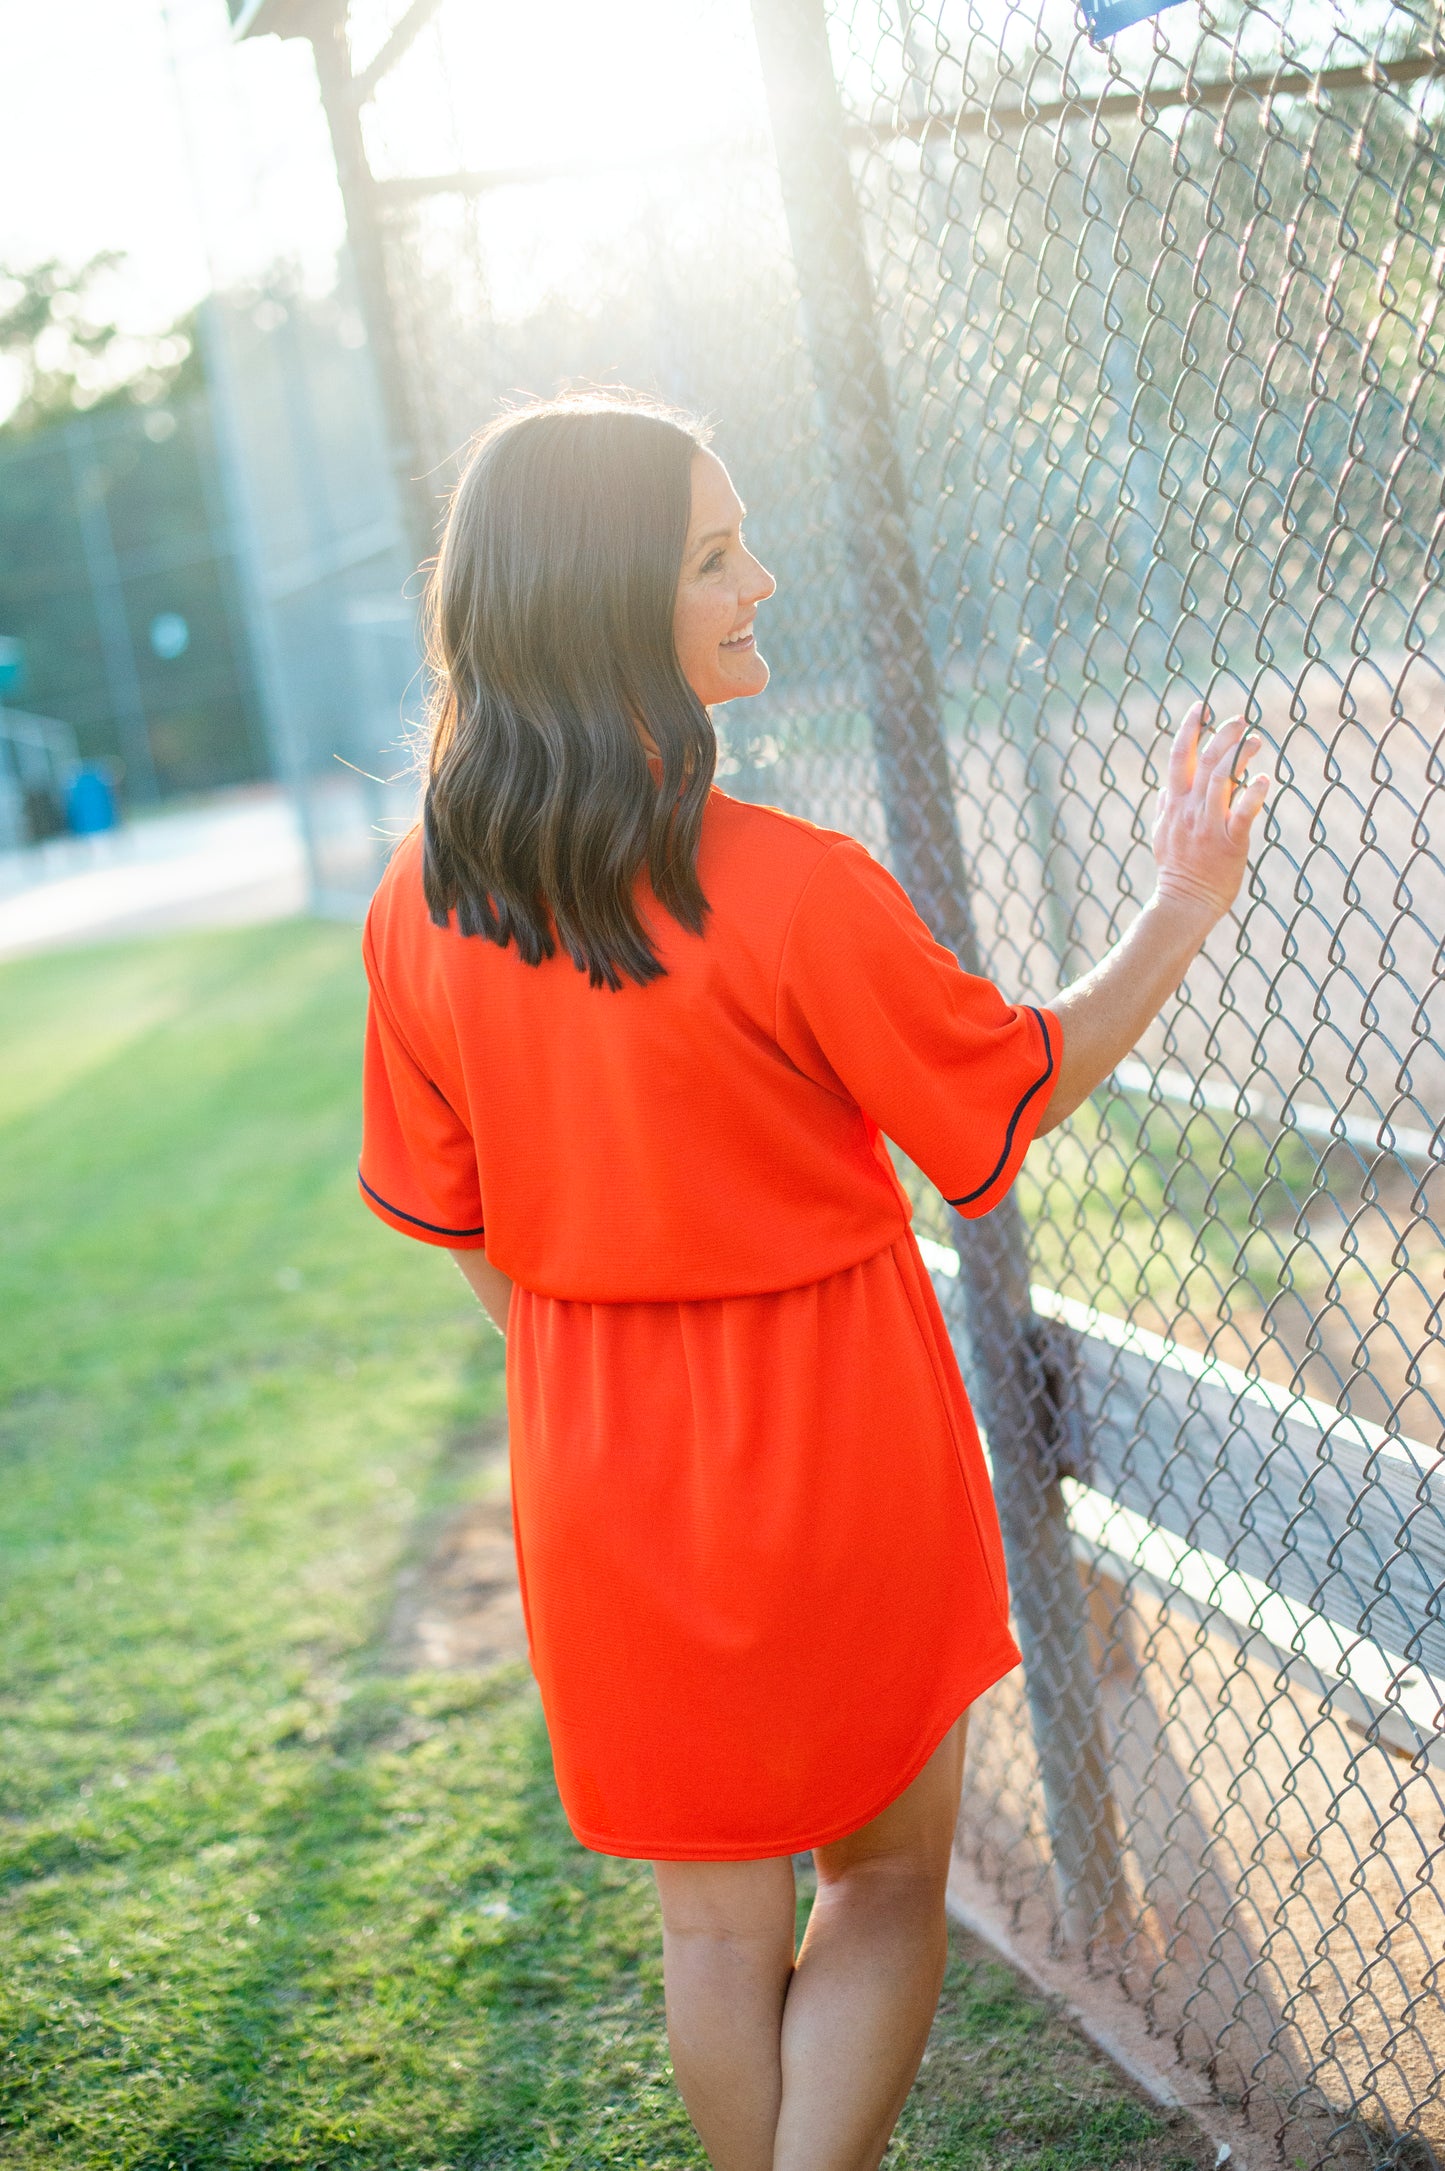 Orange Astros Women's Jersey Dress